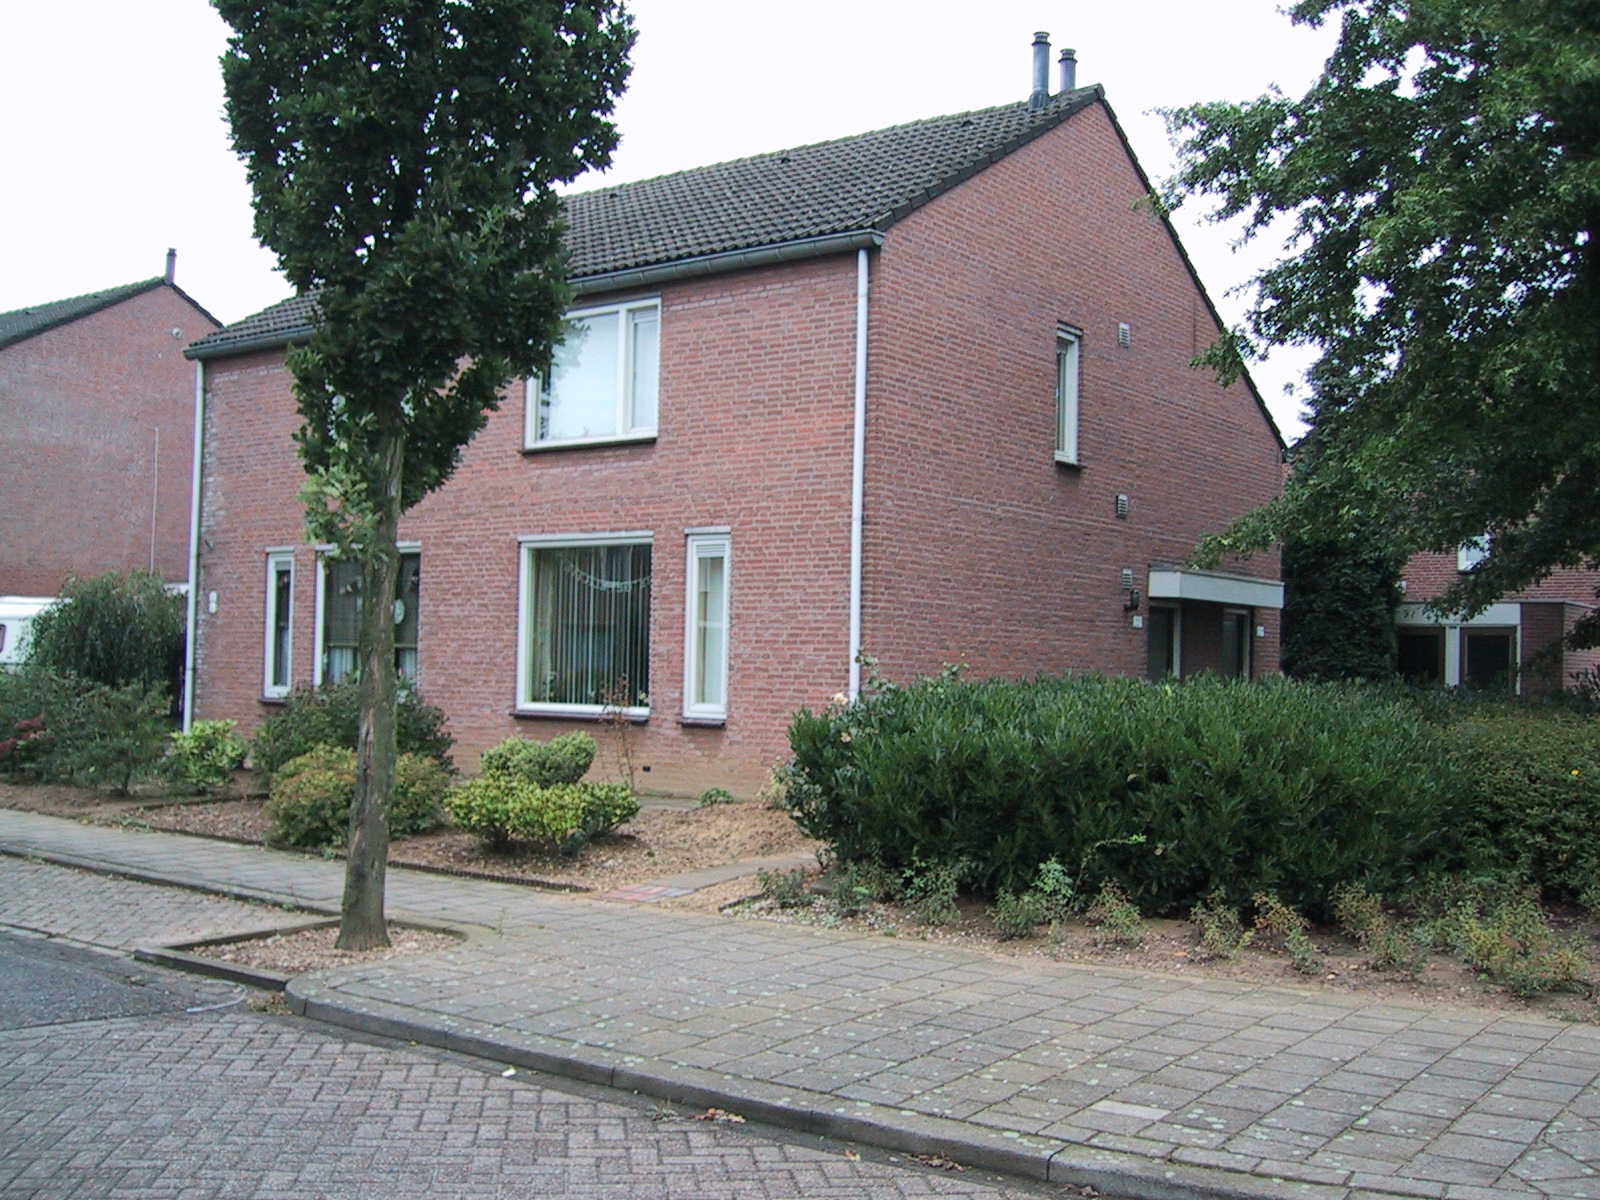 Luikstraat 16, 6051 LK Maasbracht, Nederland